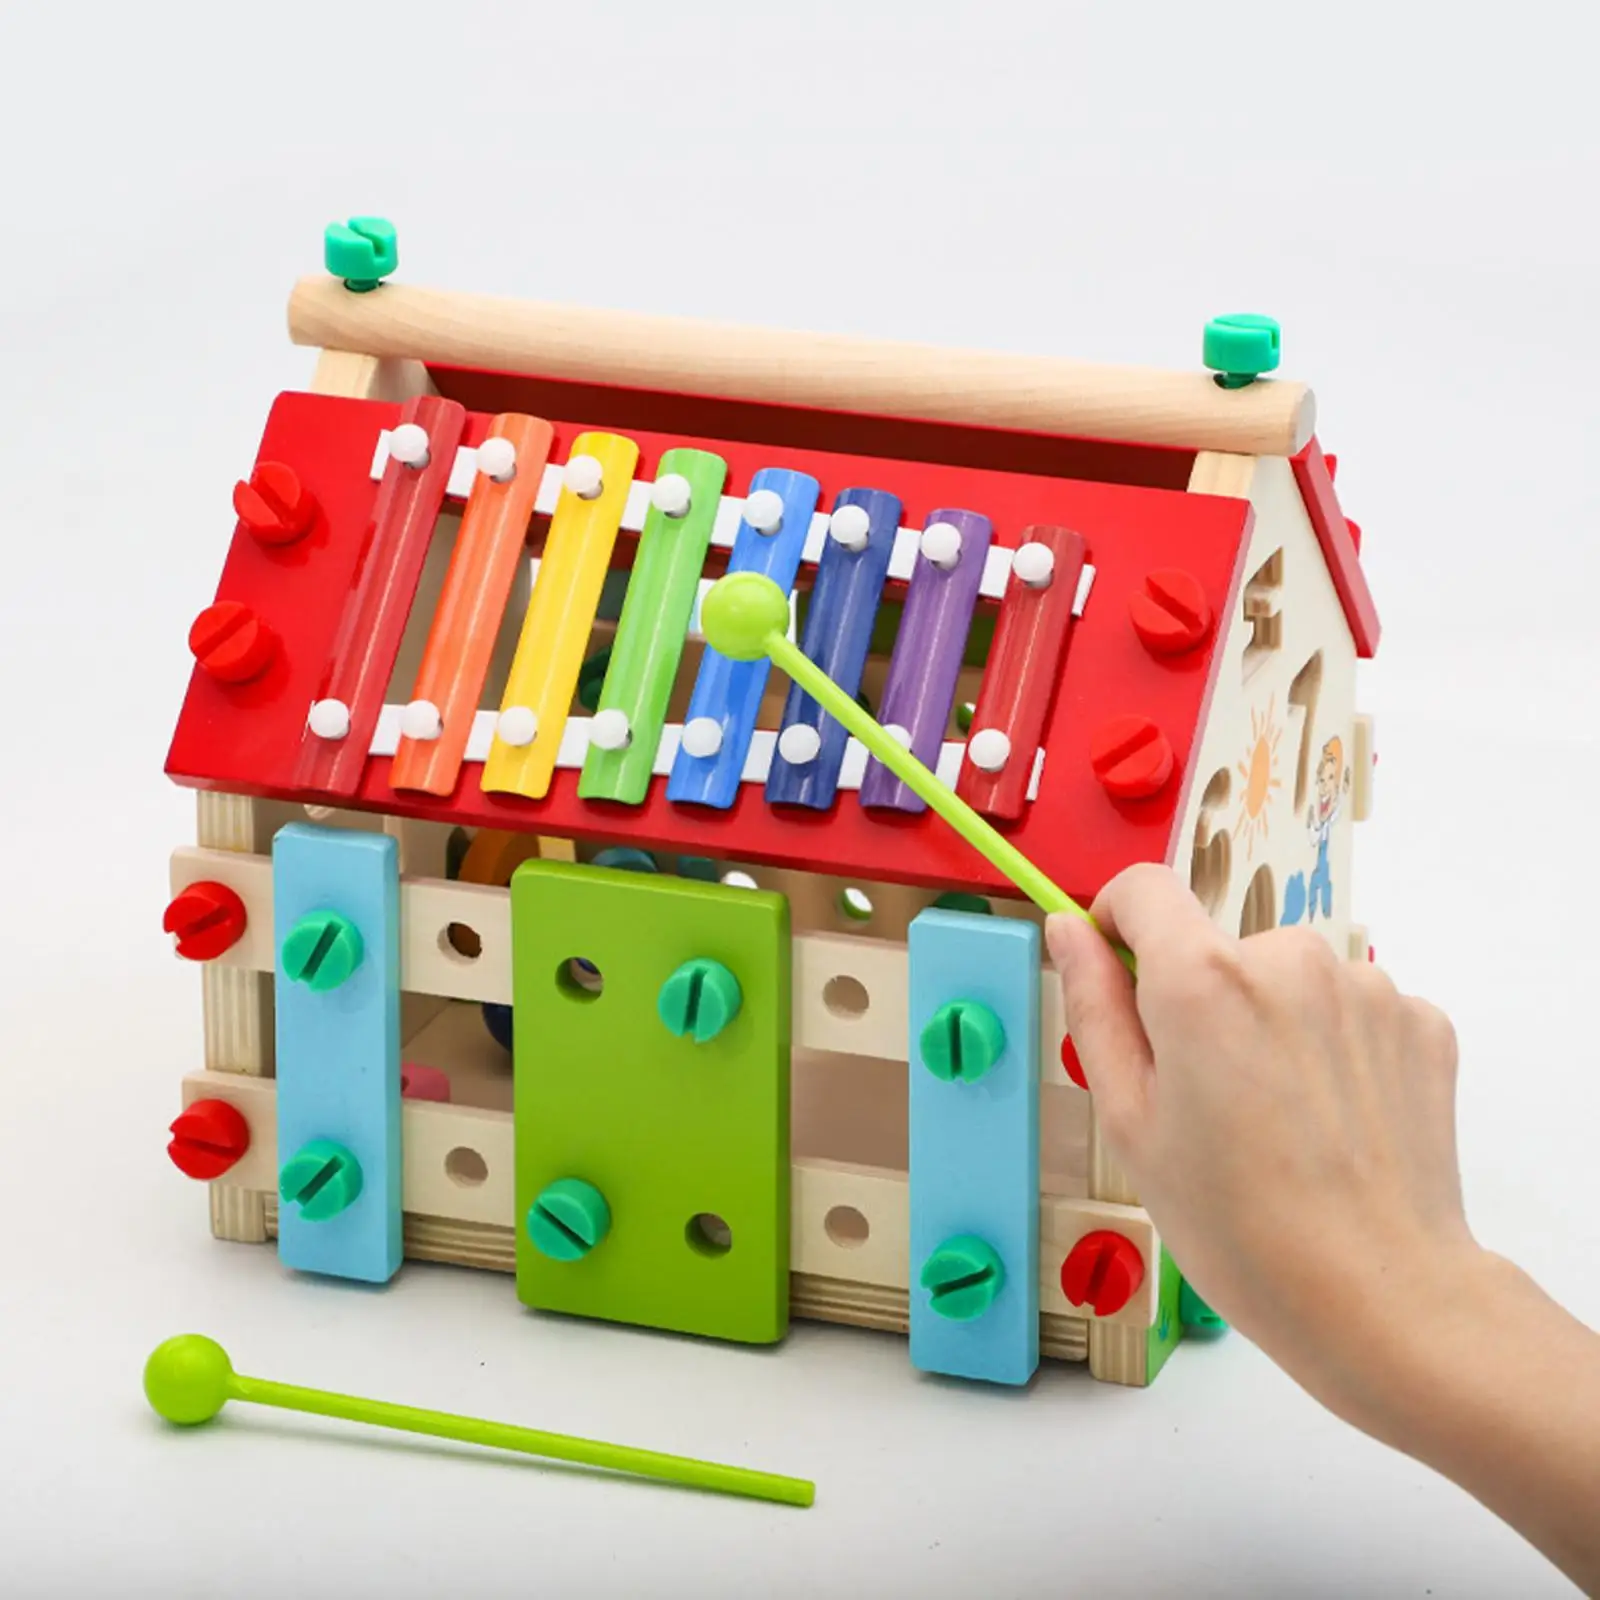 Wooden Activity Cube Multifunction Fine Motor Skills Sensory Toy Early Development Montessori for Boys Girls Kids Birthday Gift